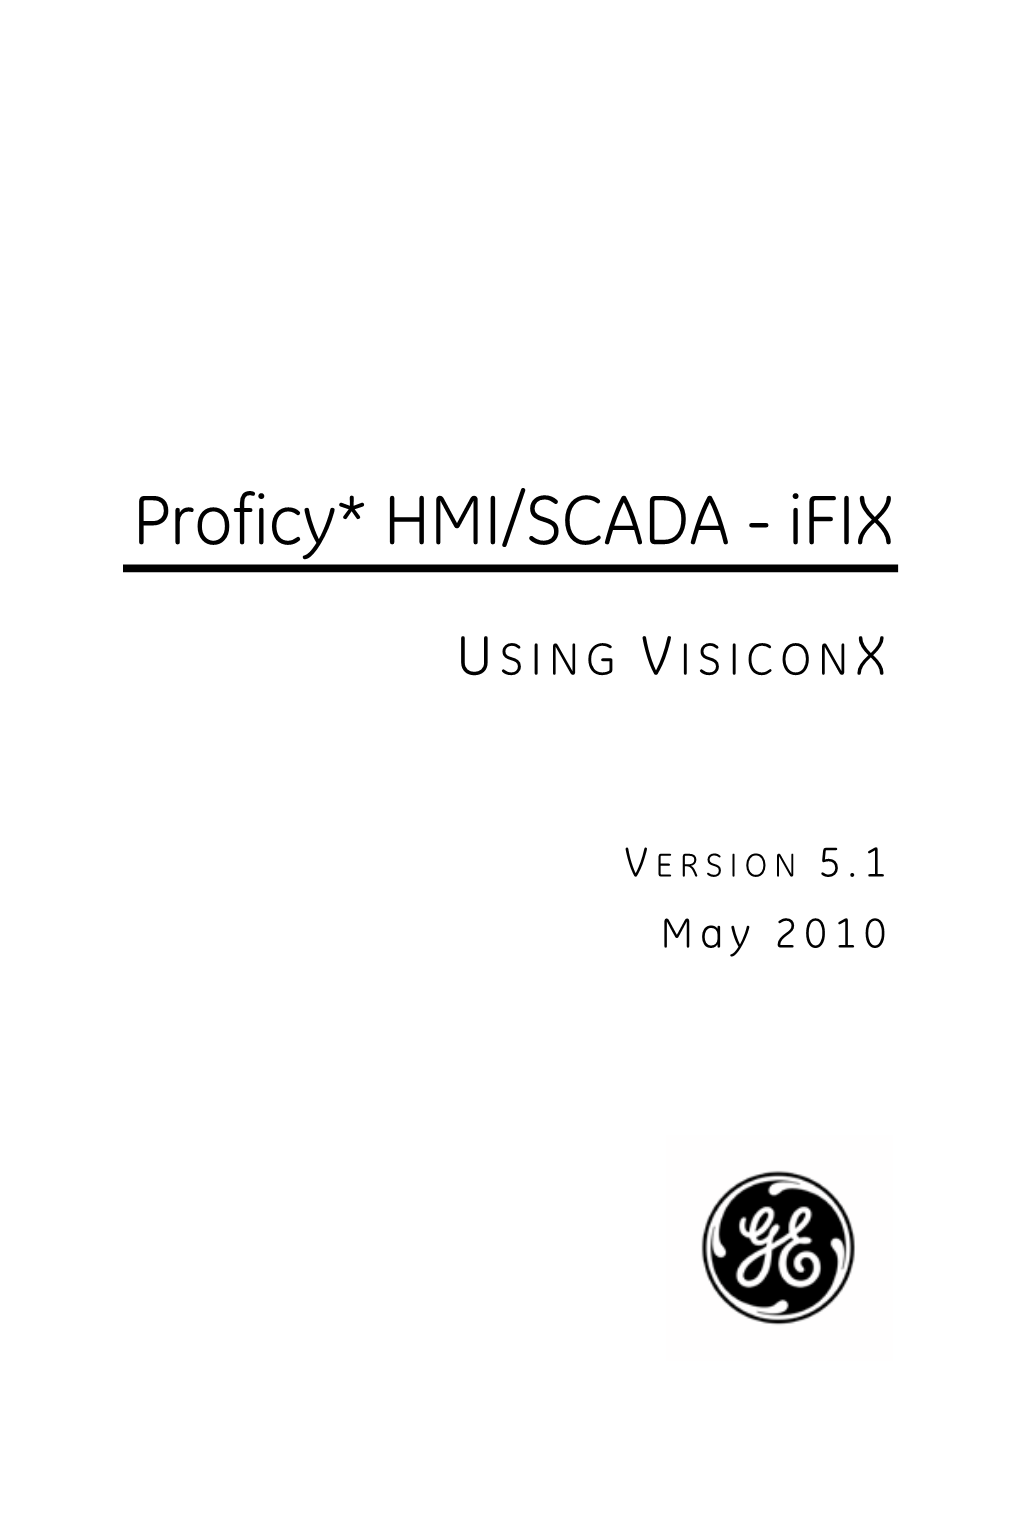 Using Visiconx in Ifix